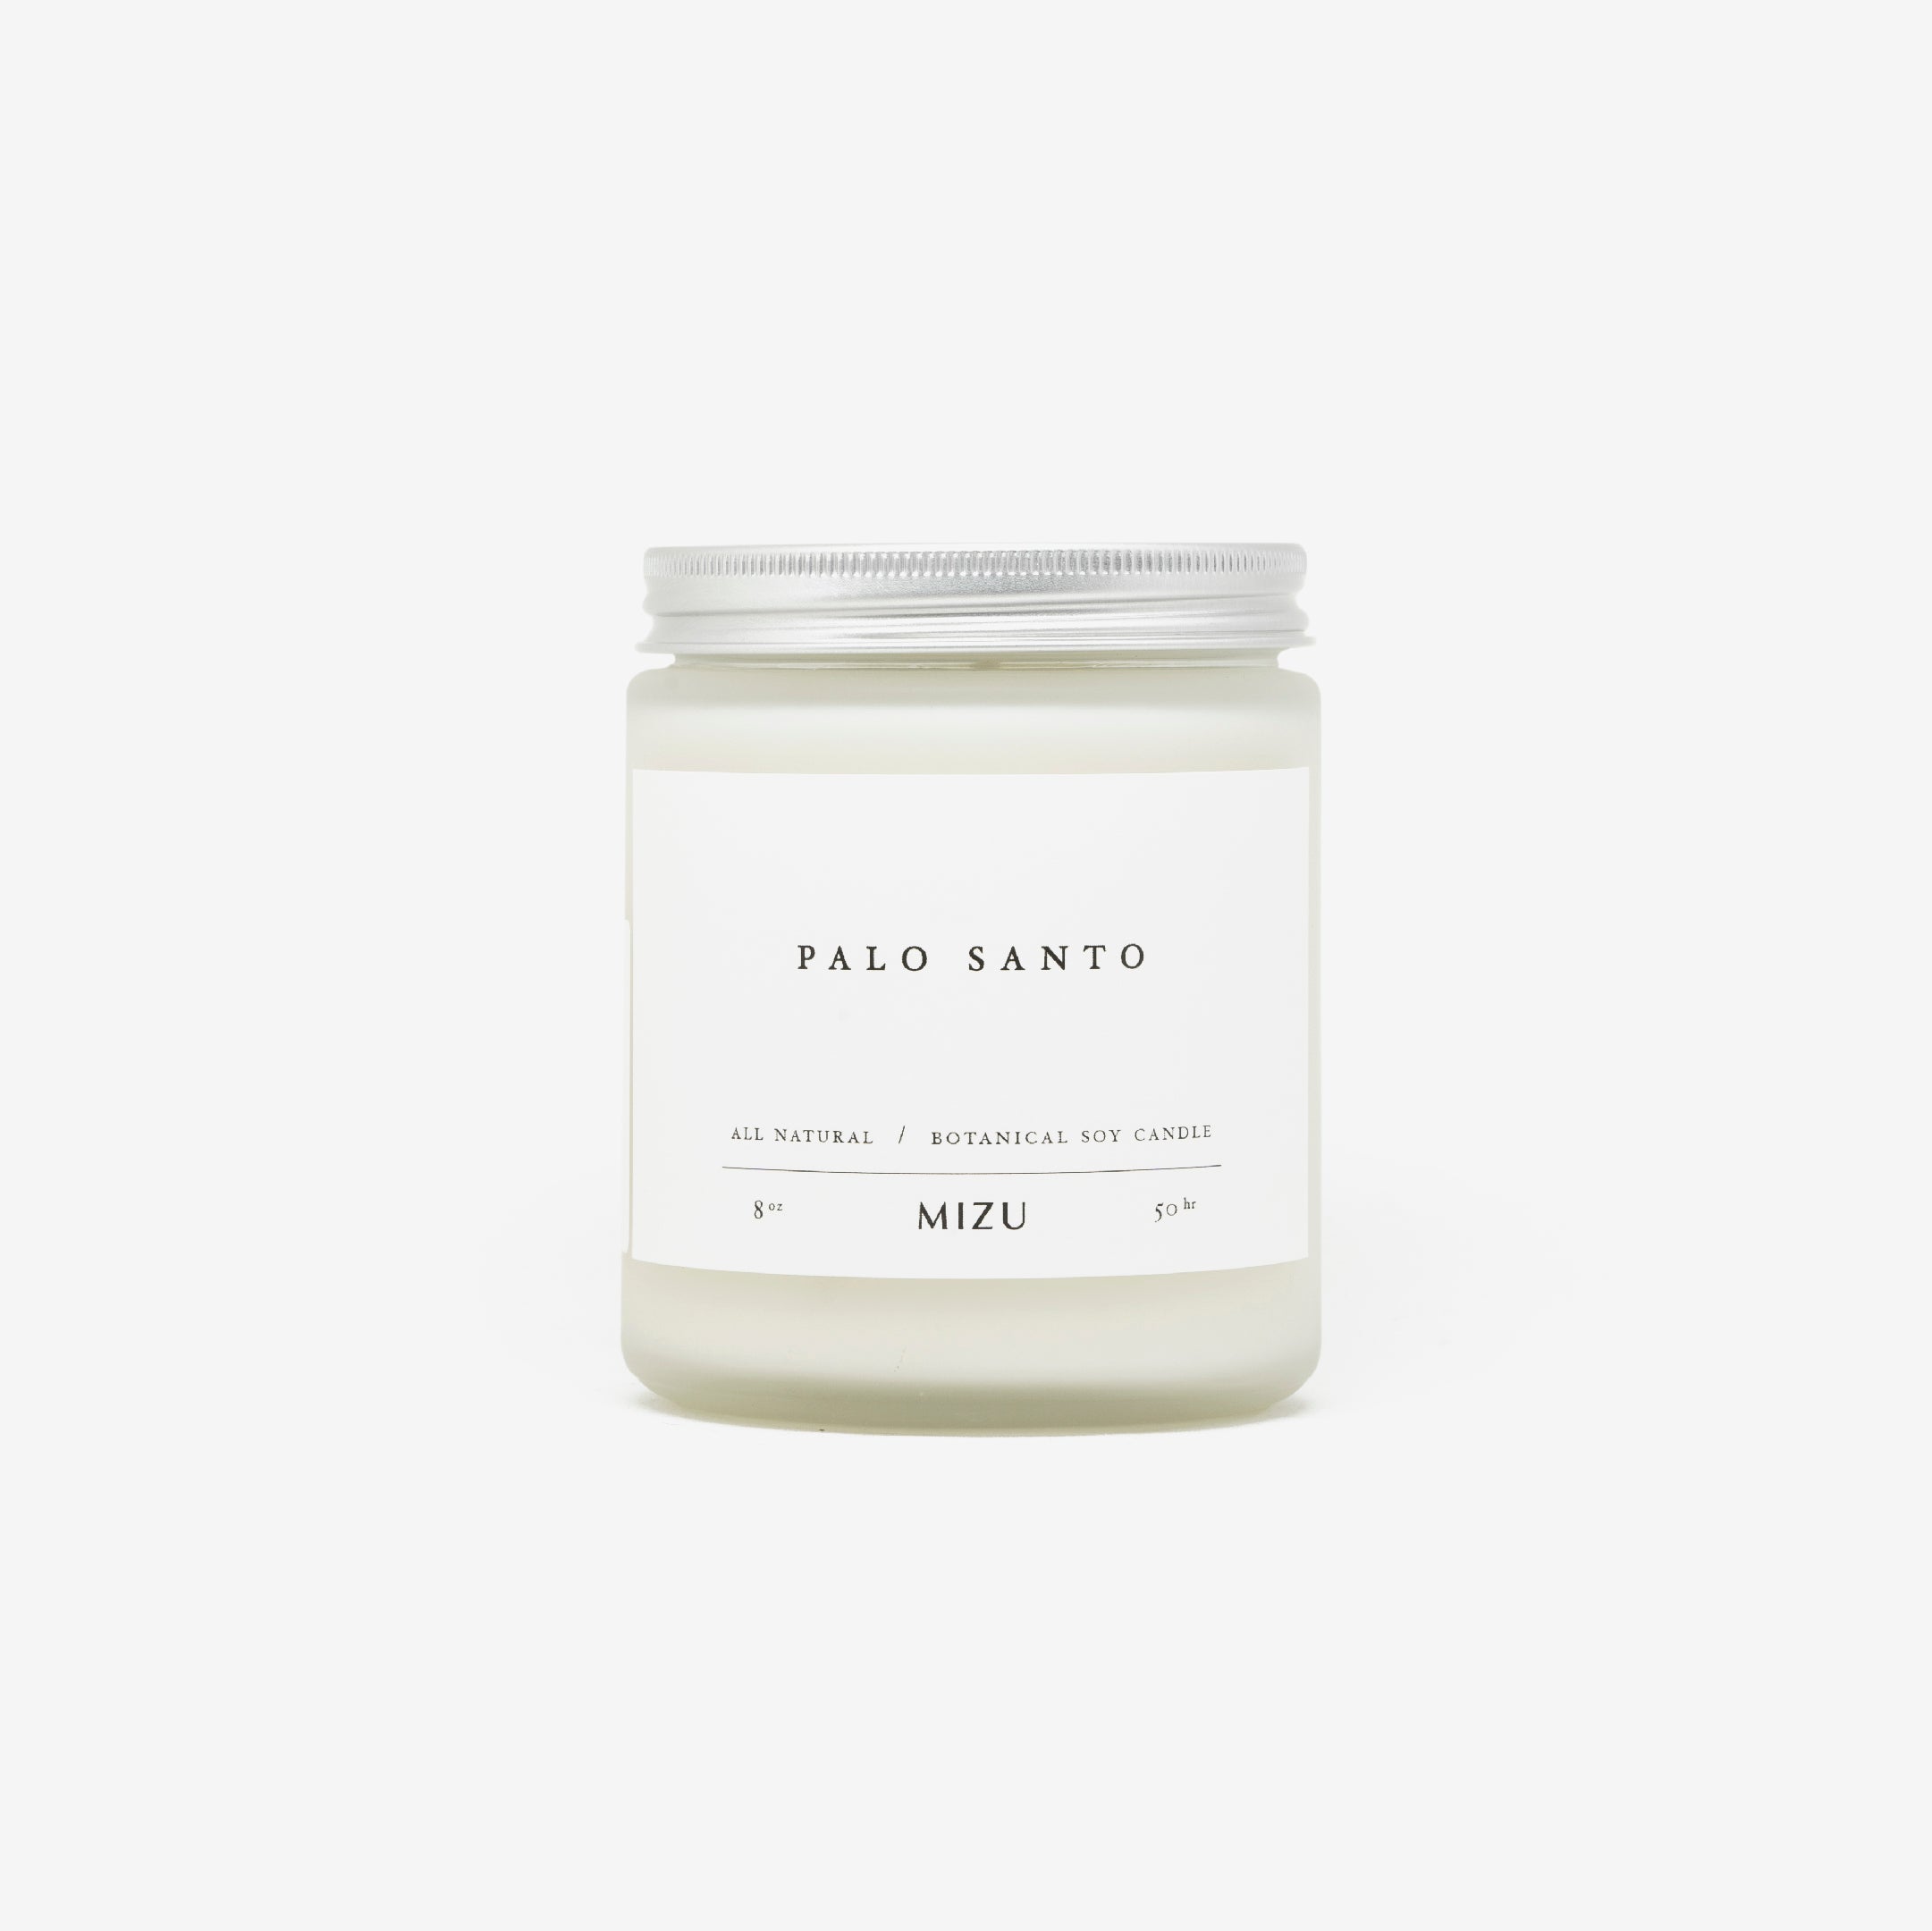 Palo santo essential oil candle